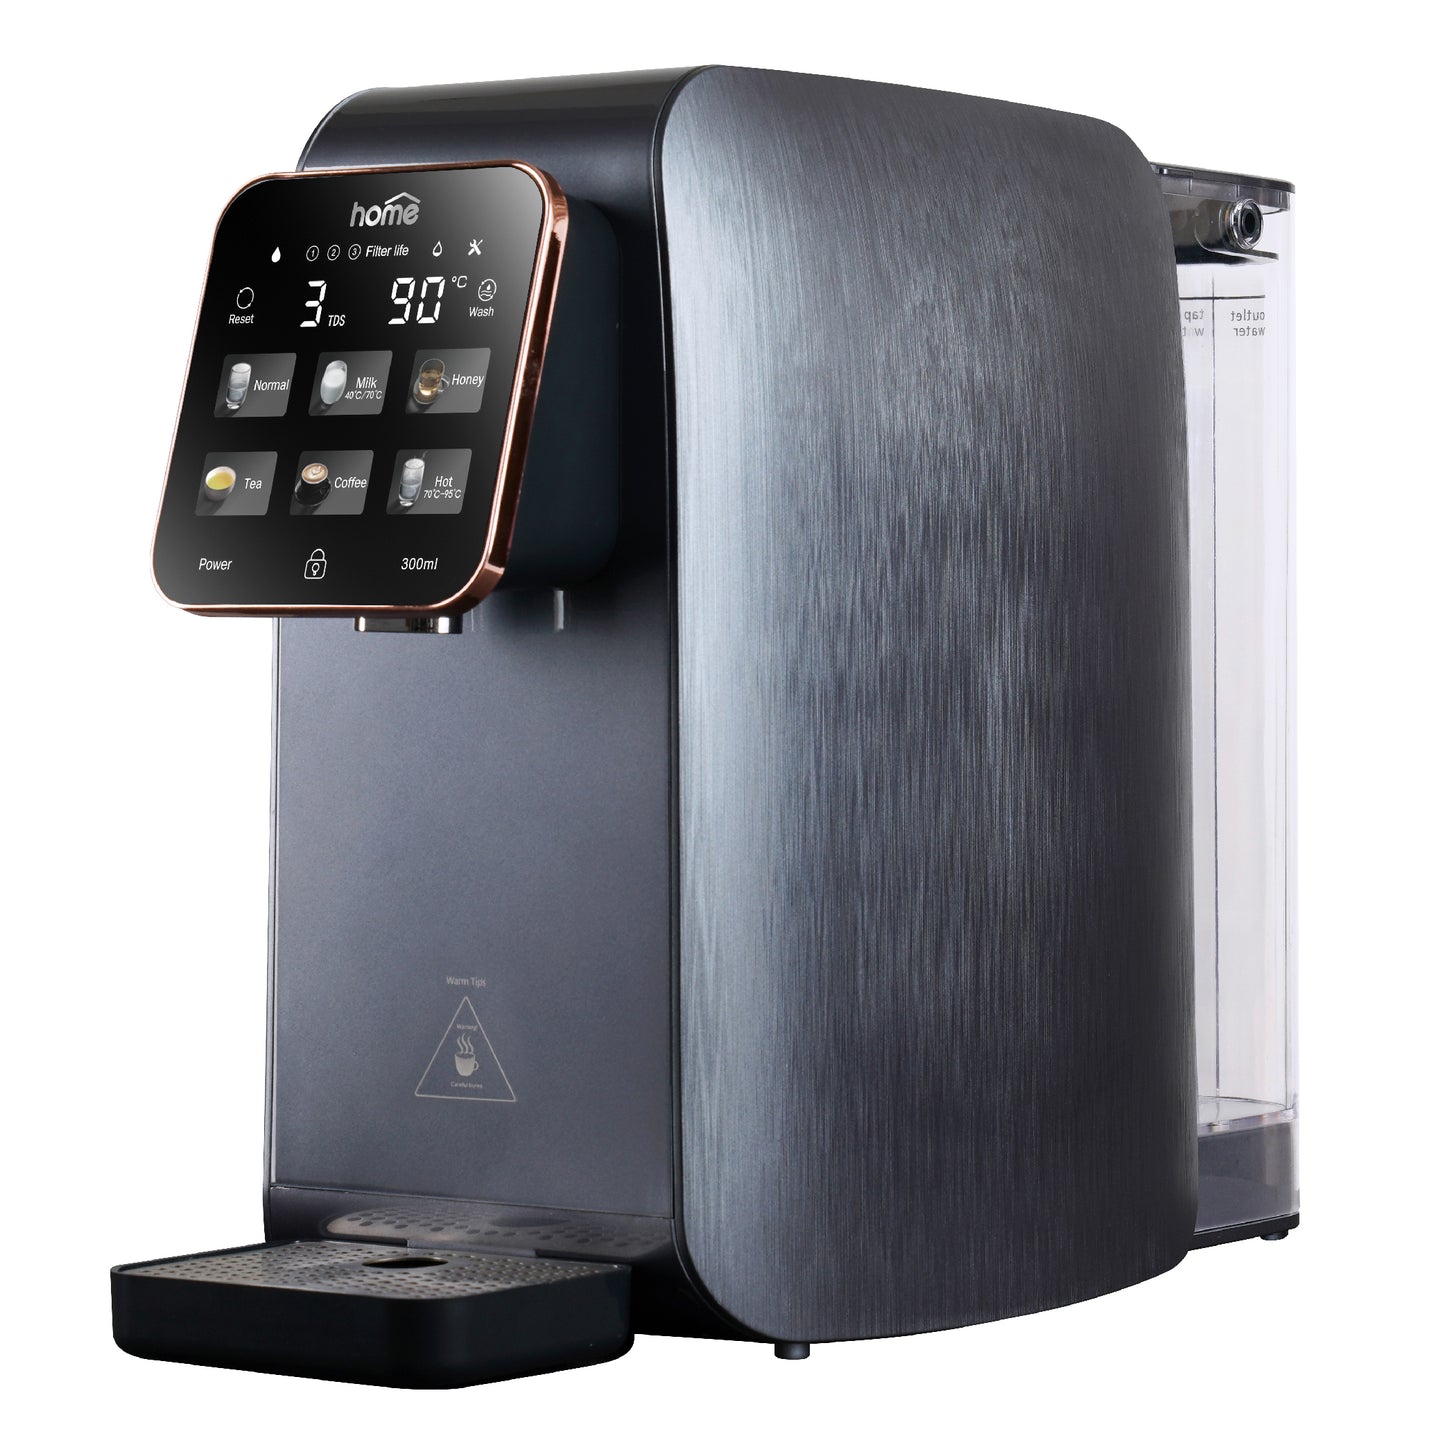 (New) Aquahome Water Dispenser